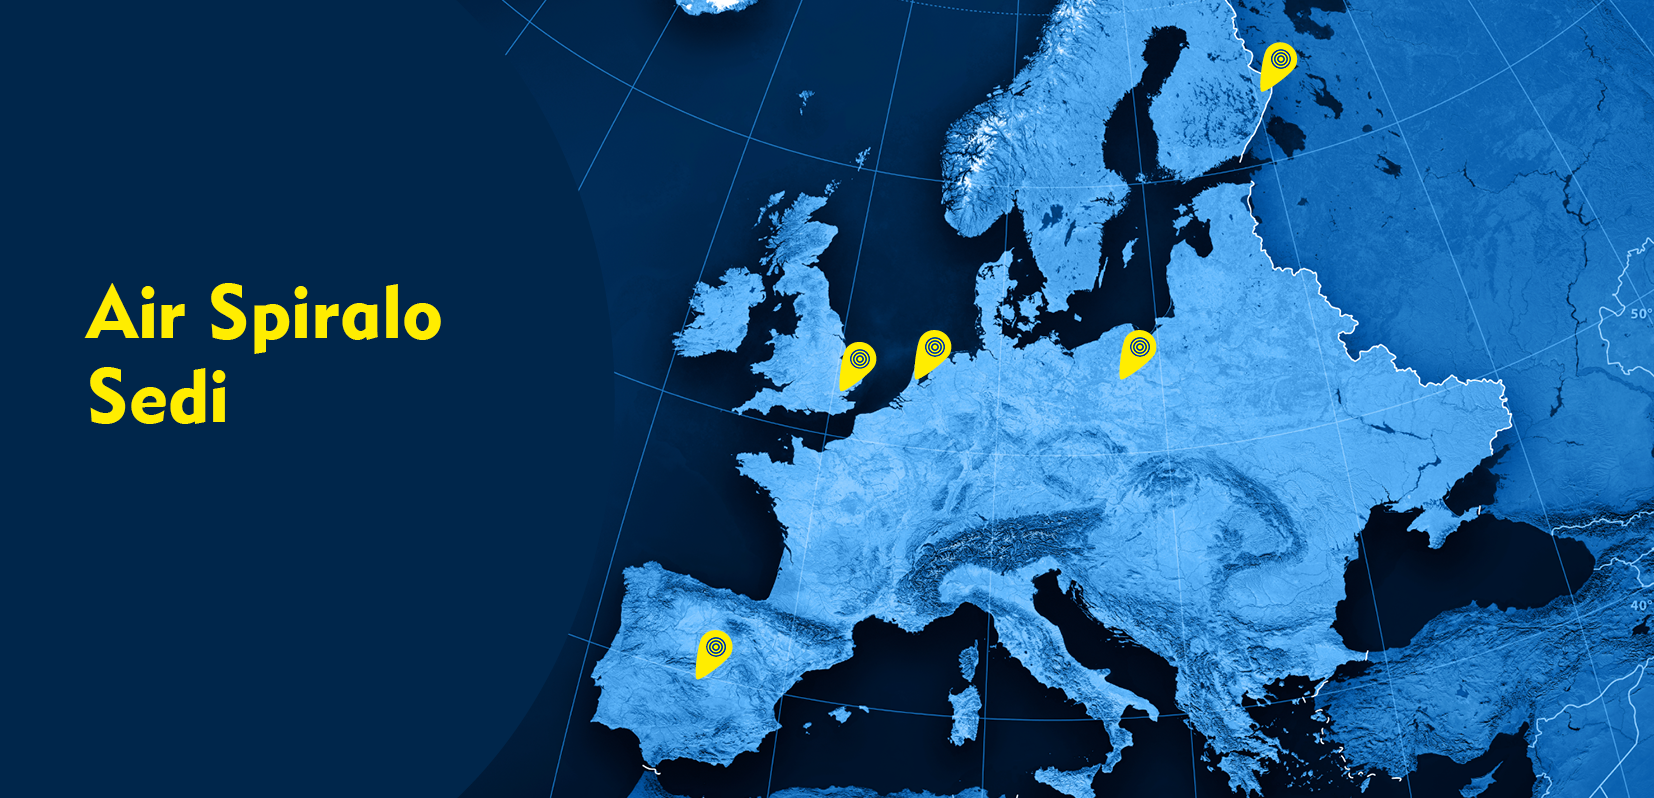 Sedi Air Spiralo nei Paesi Bassi, in Inghilterra, Finlandia e Polonia